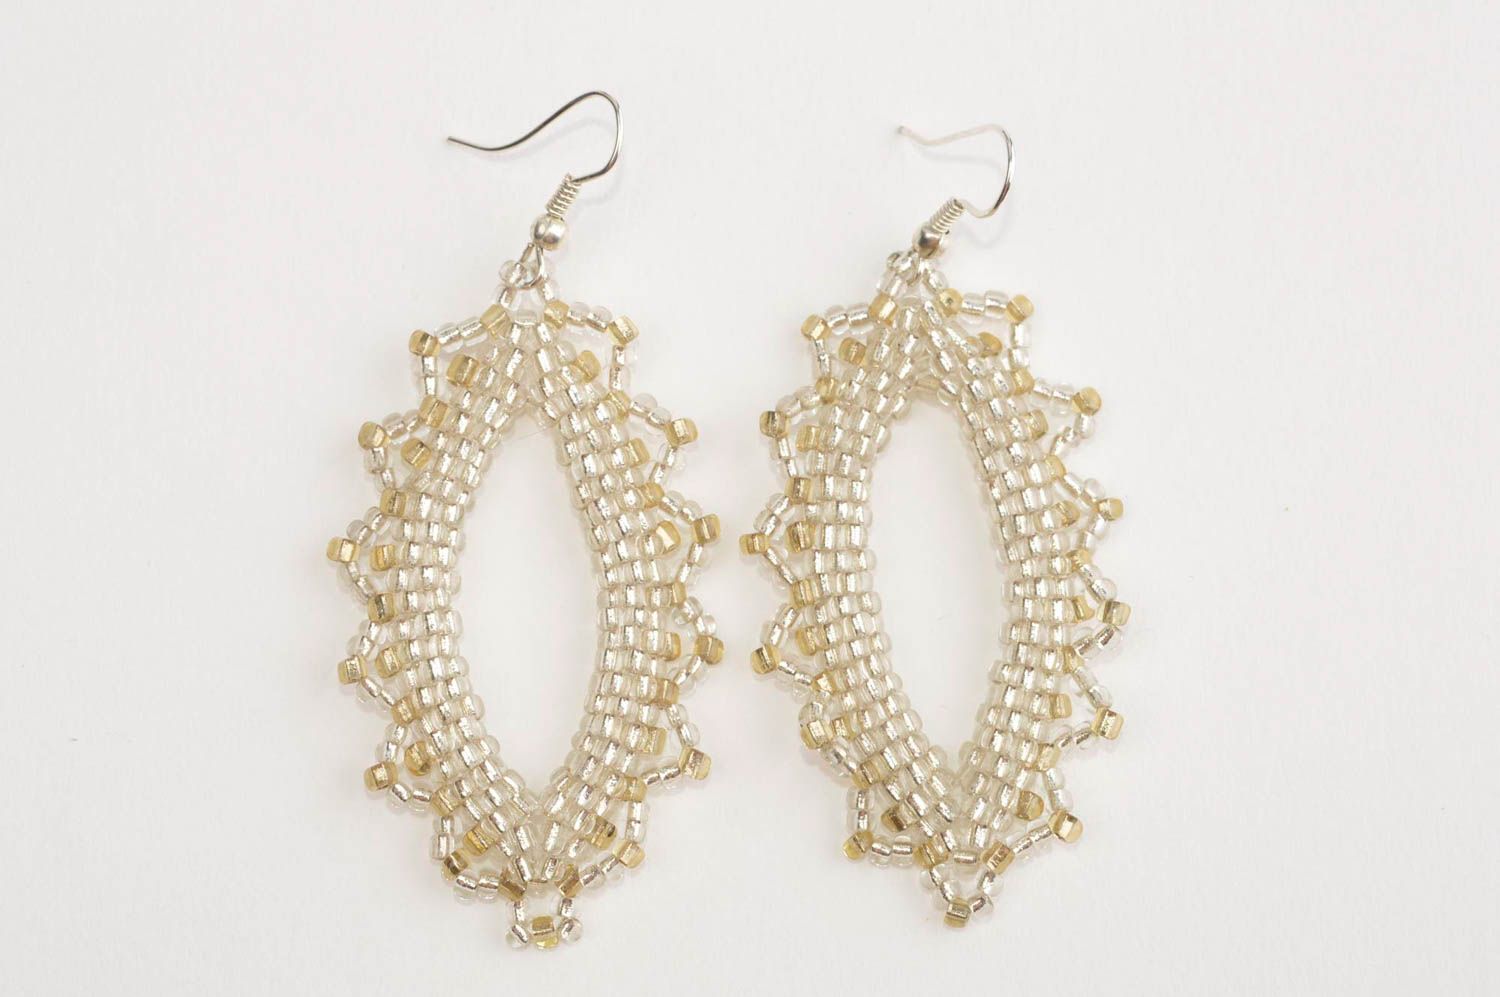 Beaded earrings handmade woven earrings with charms elegant fashion bijouterie photo 2